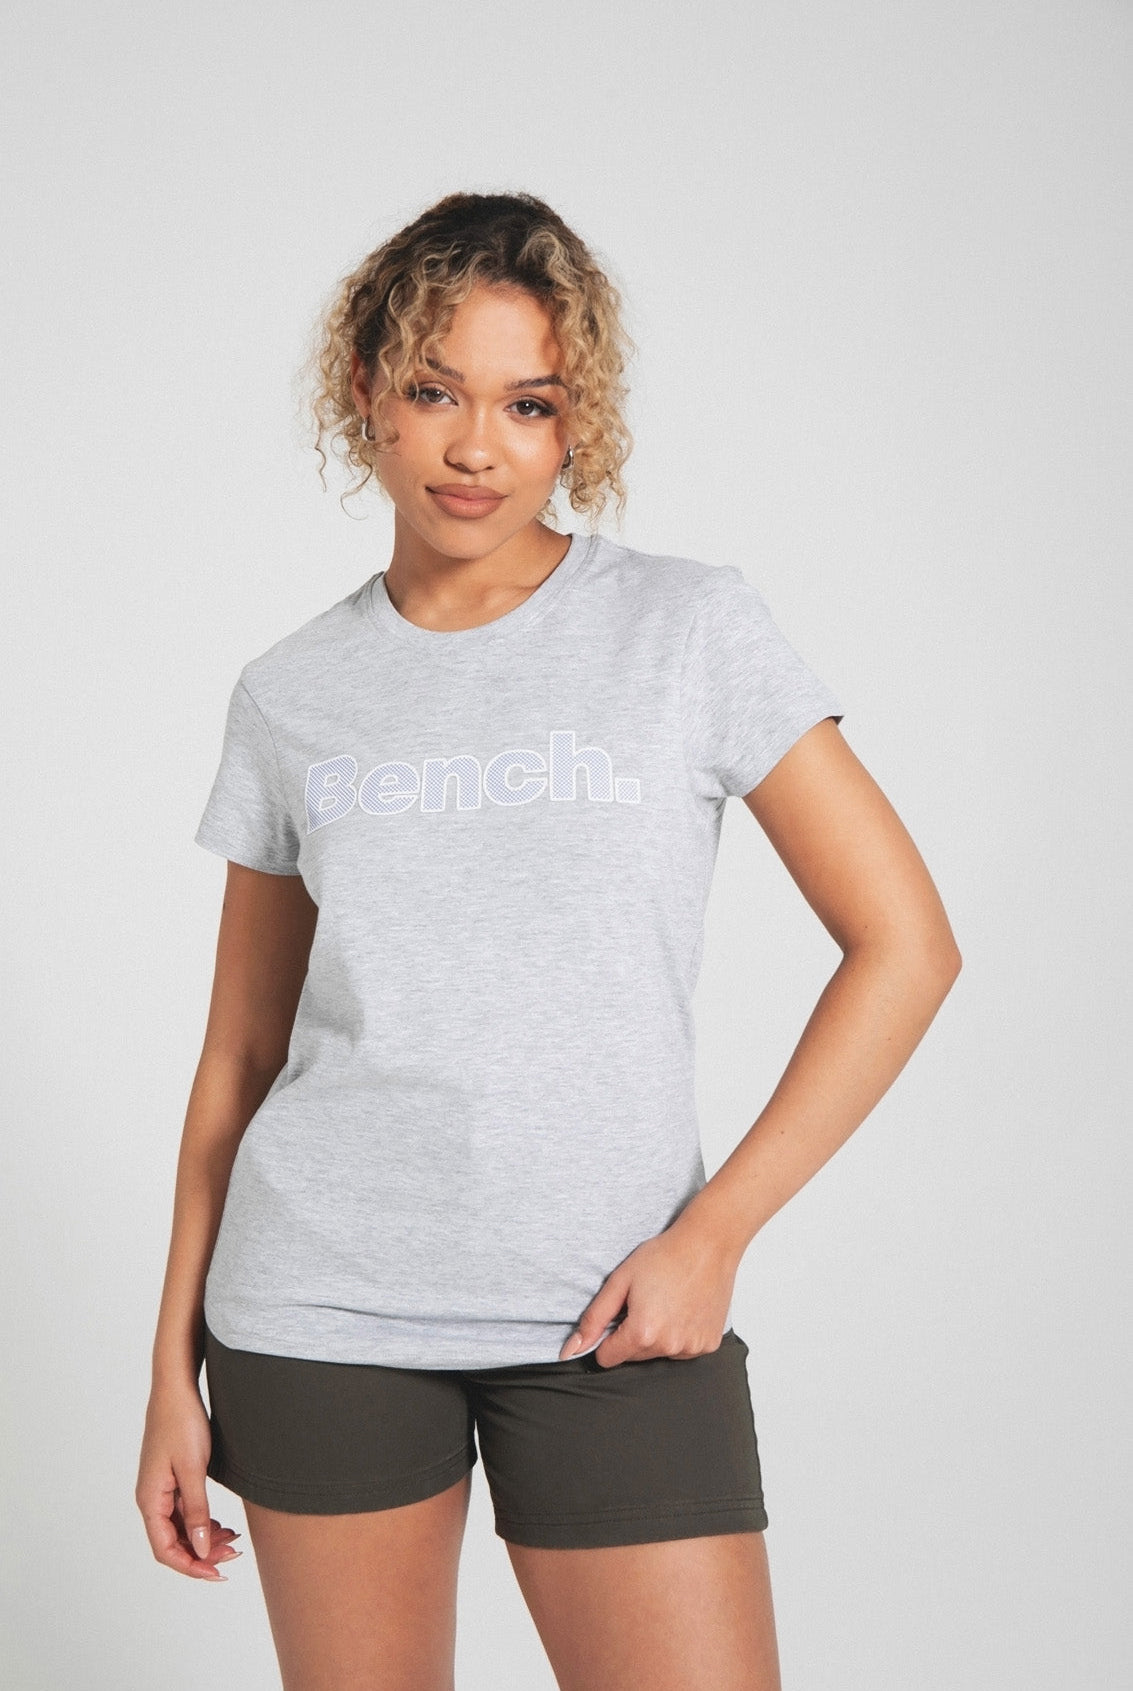 Womens 'LEORA' SS T-Shirt - GREY MARL - Shop at www.Bench.co.uk #LoveMyHood